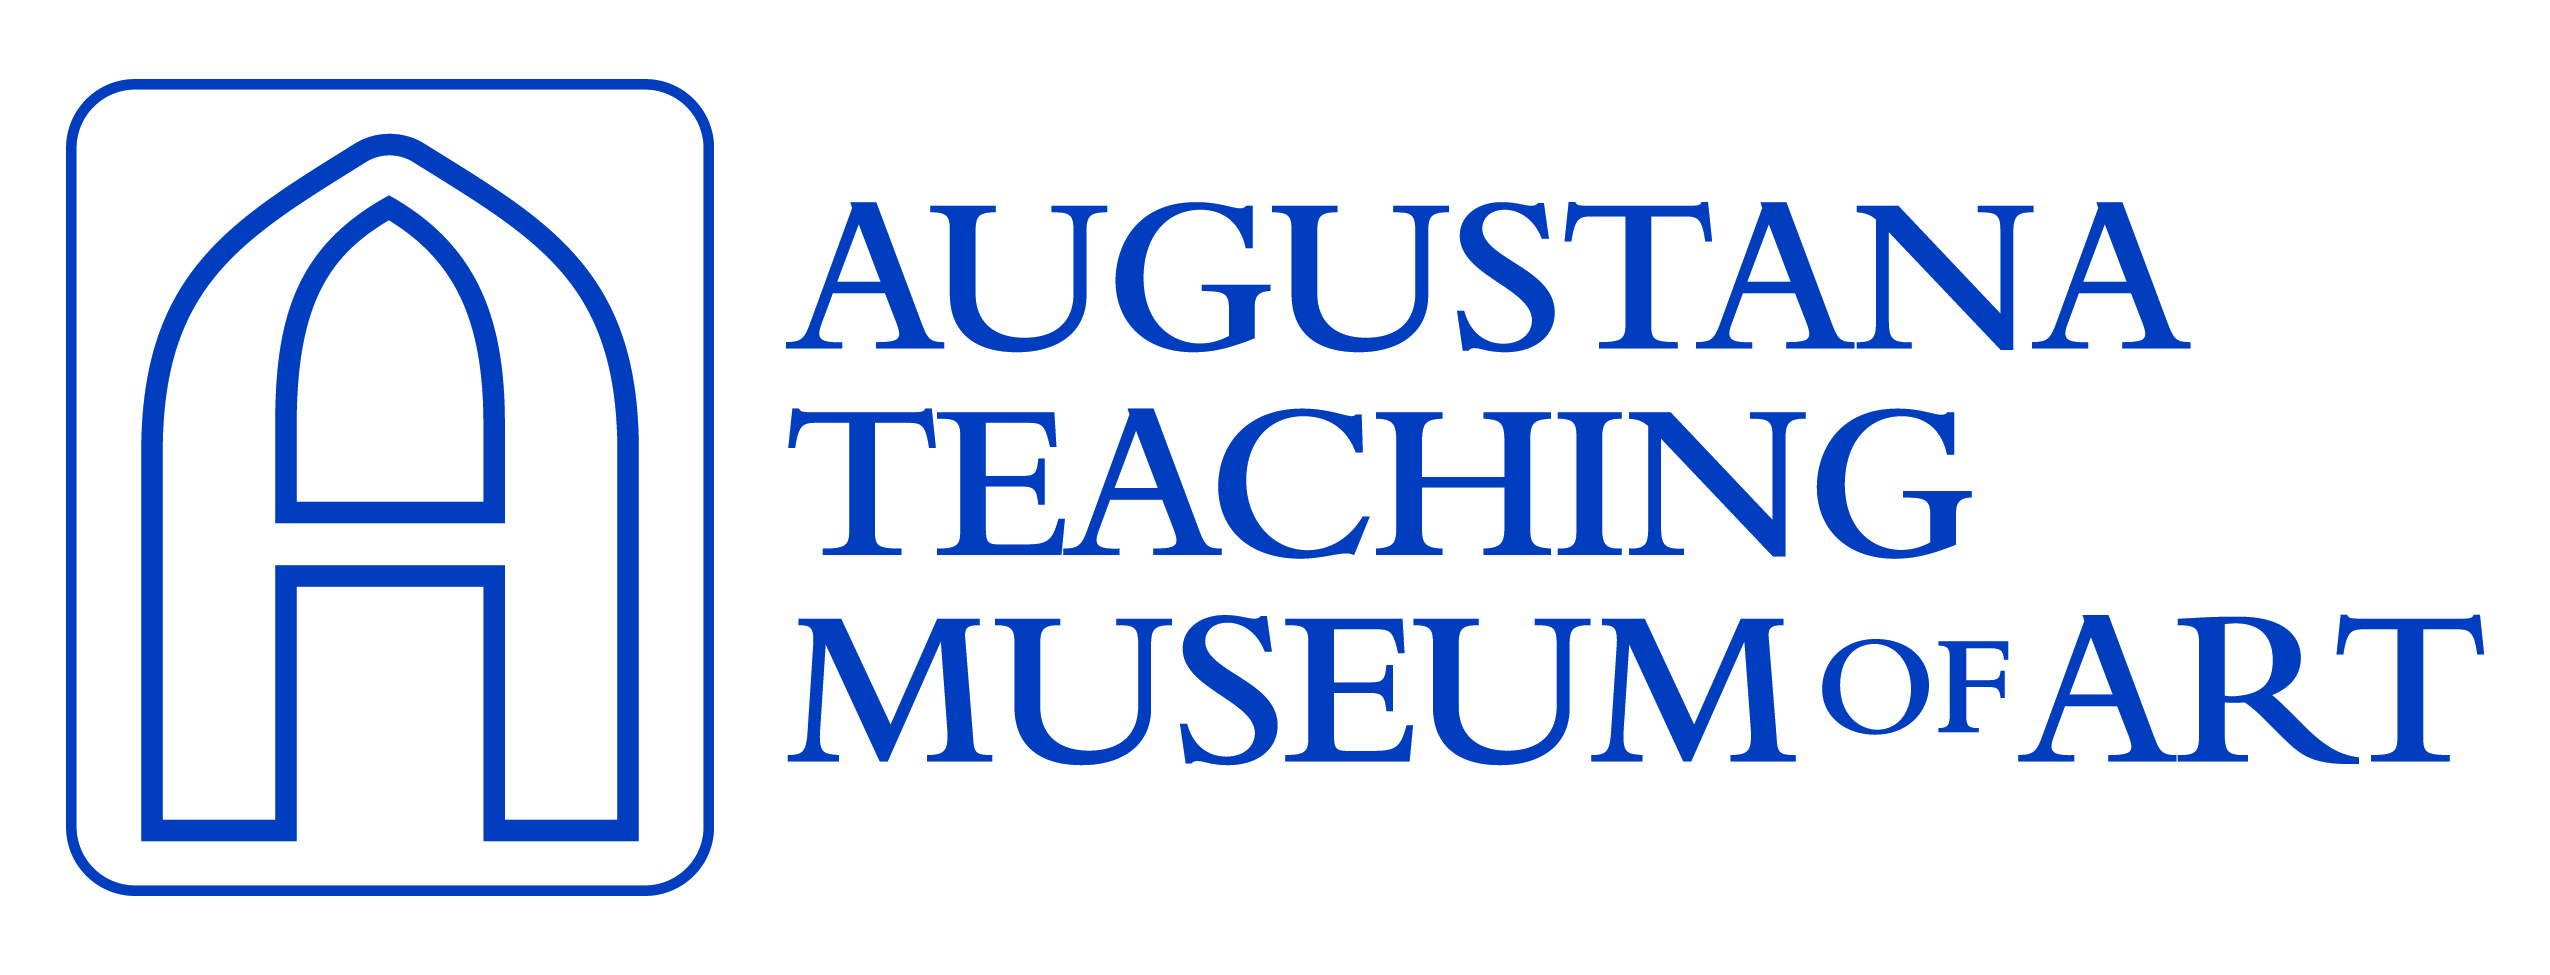 Augustana Teaching Museum of Art